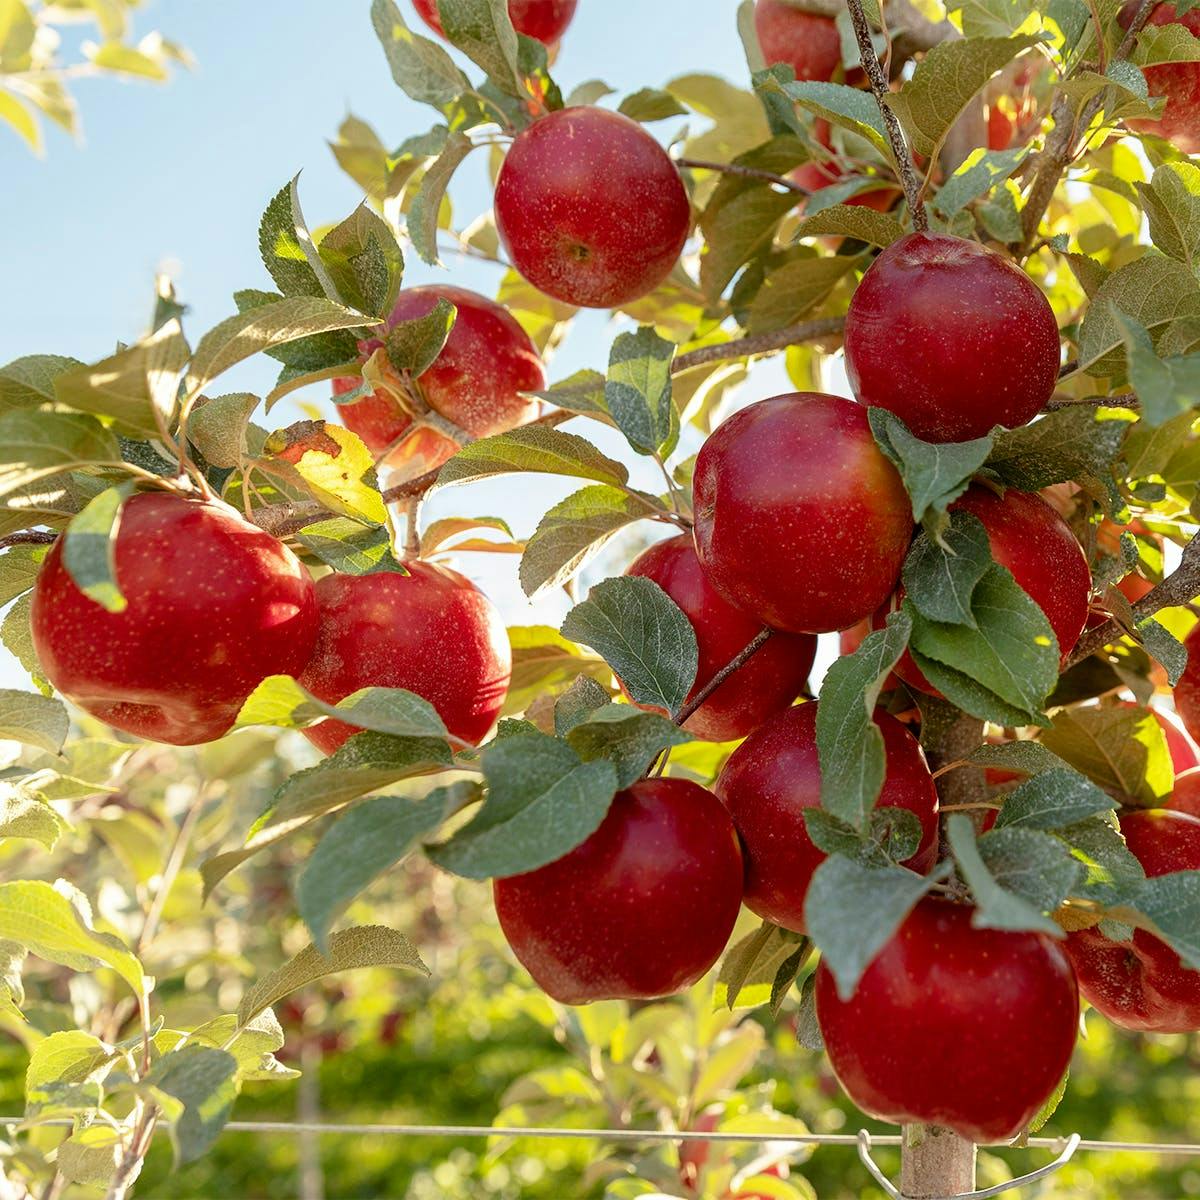 Chelan Fresh Apples, Organic, Gala